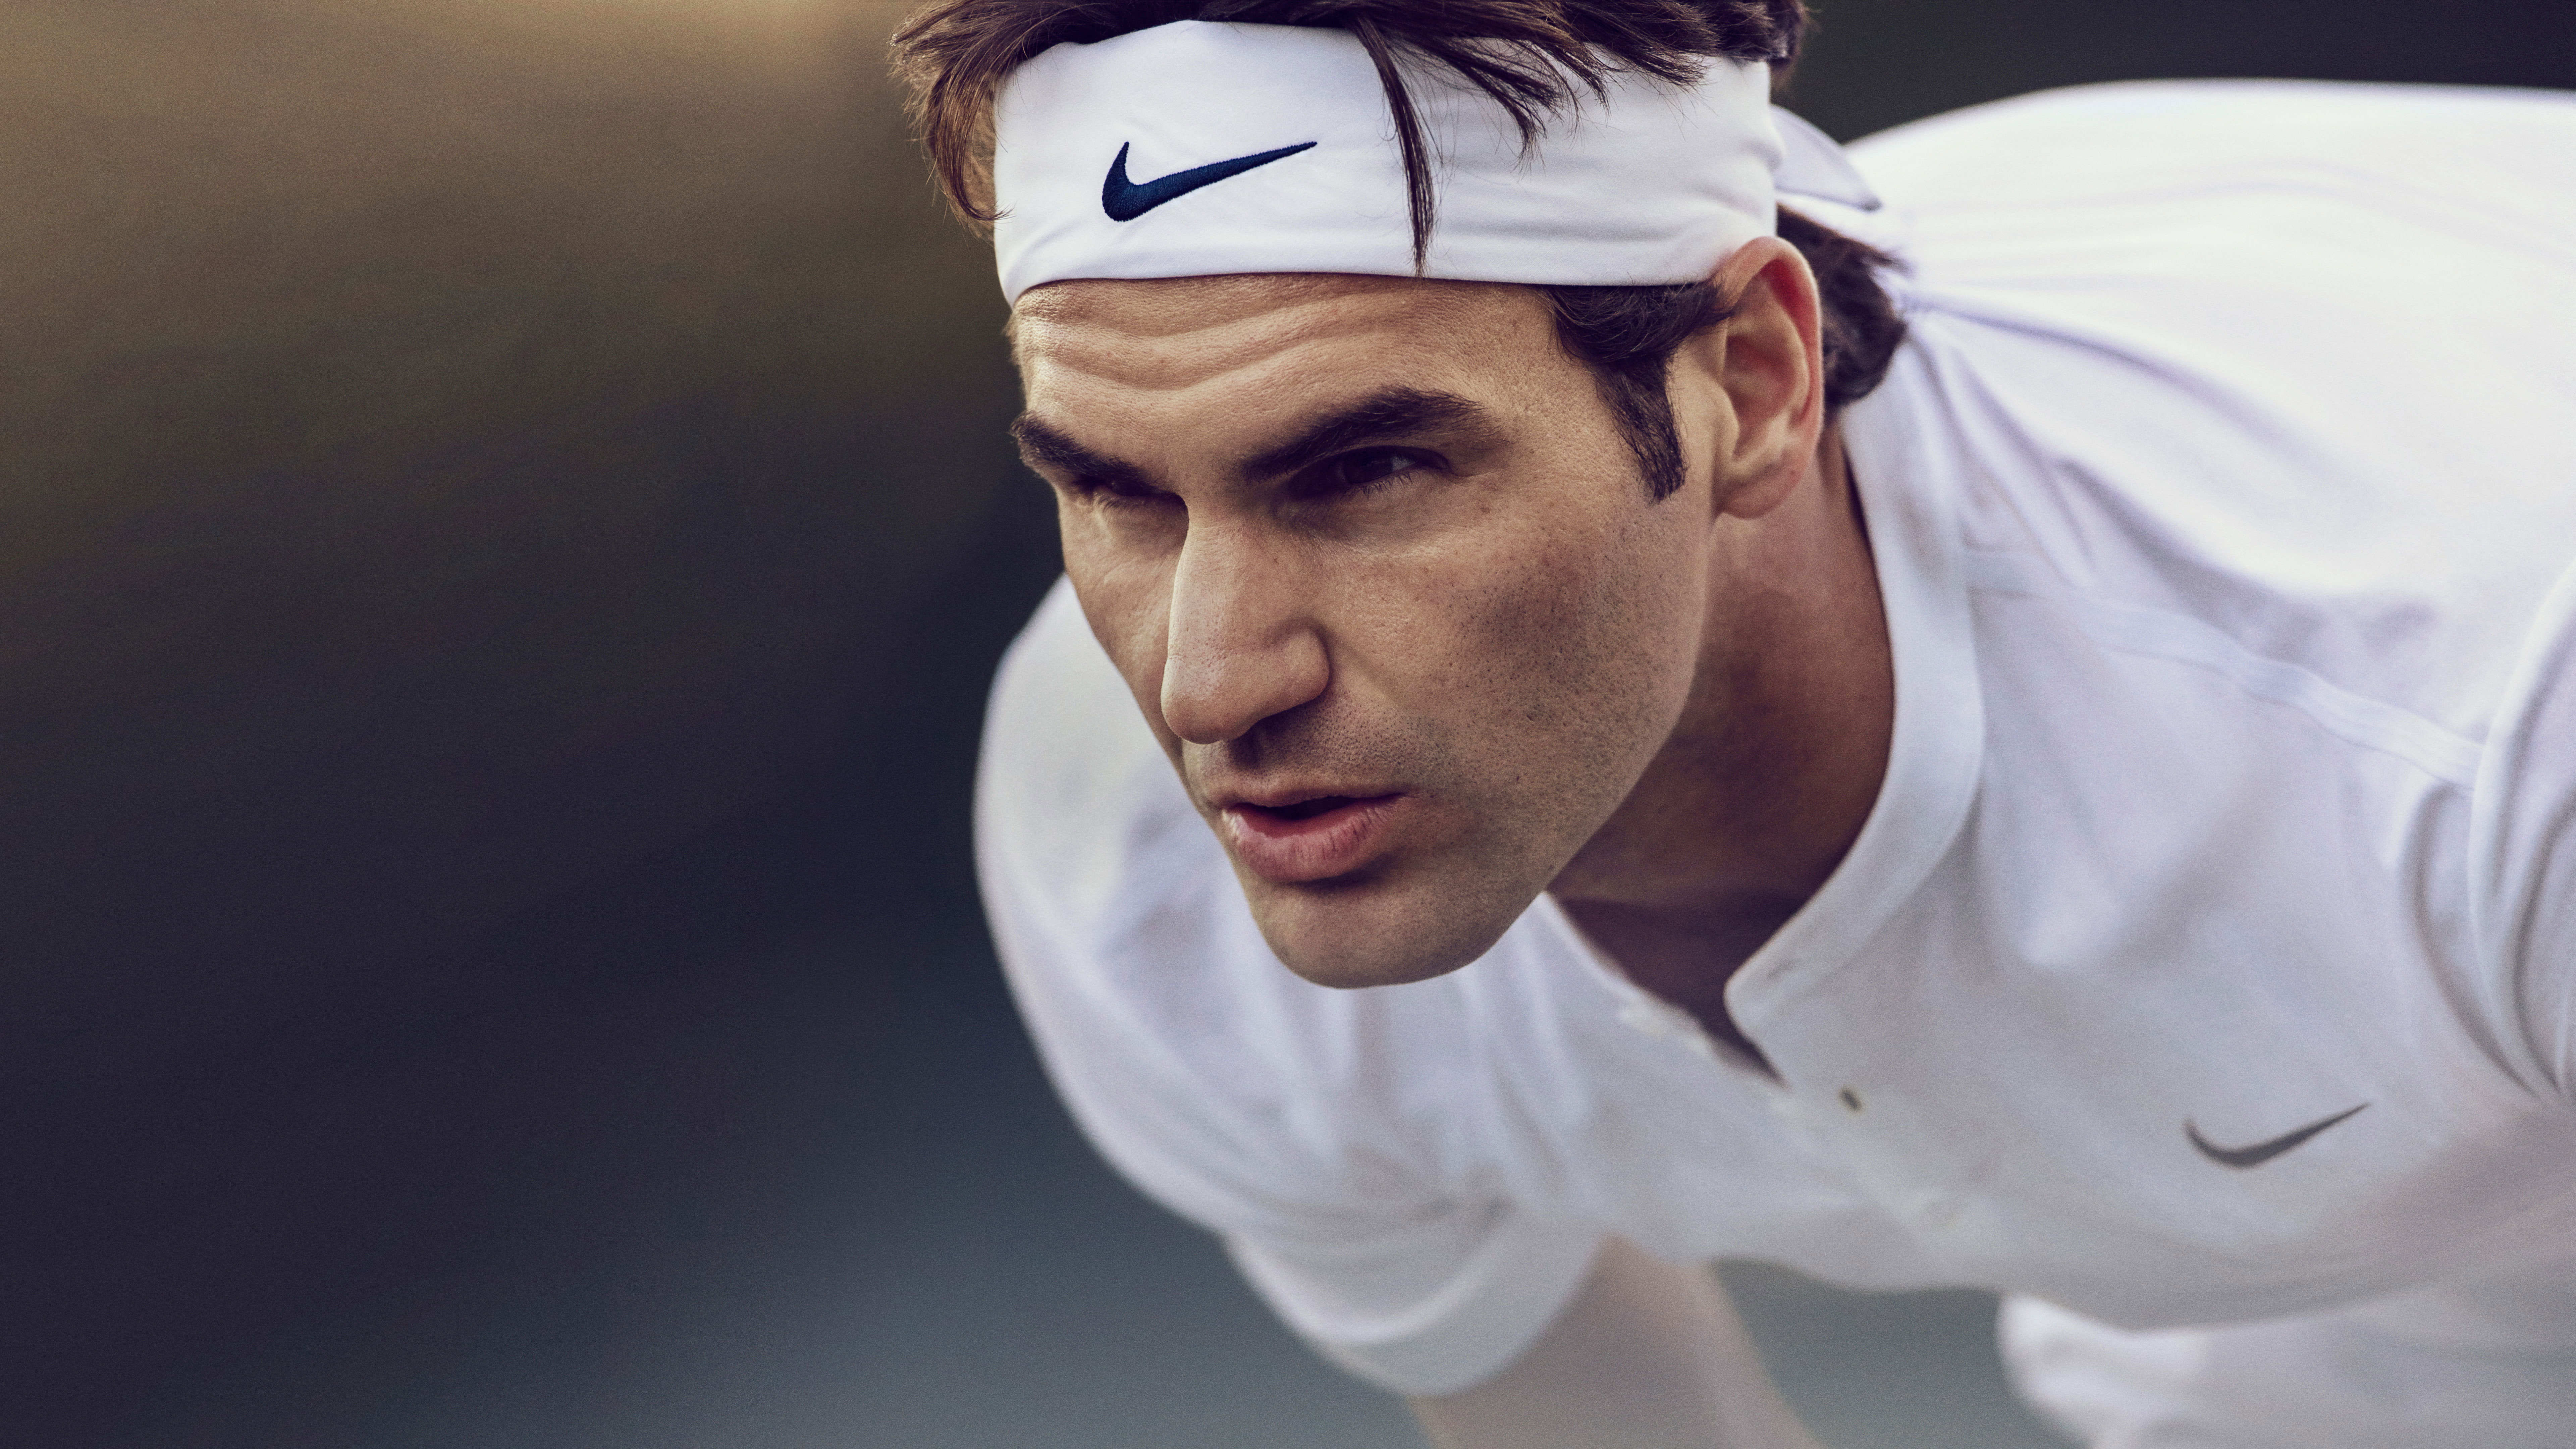 Wallpaper 4k, Roger Federer, Tennis, Wimbledon, Champion, Champion, Sports